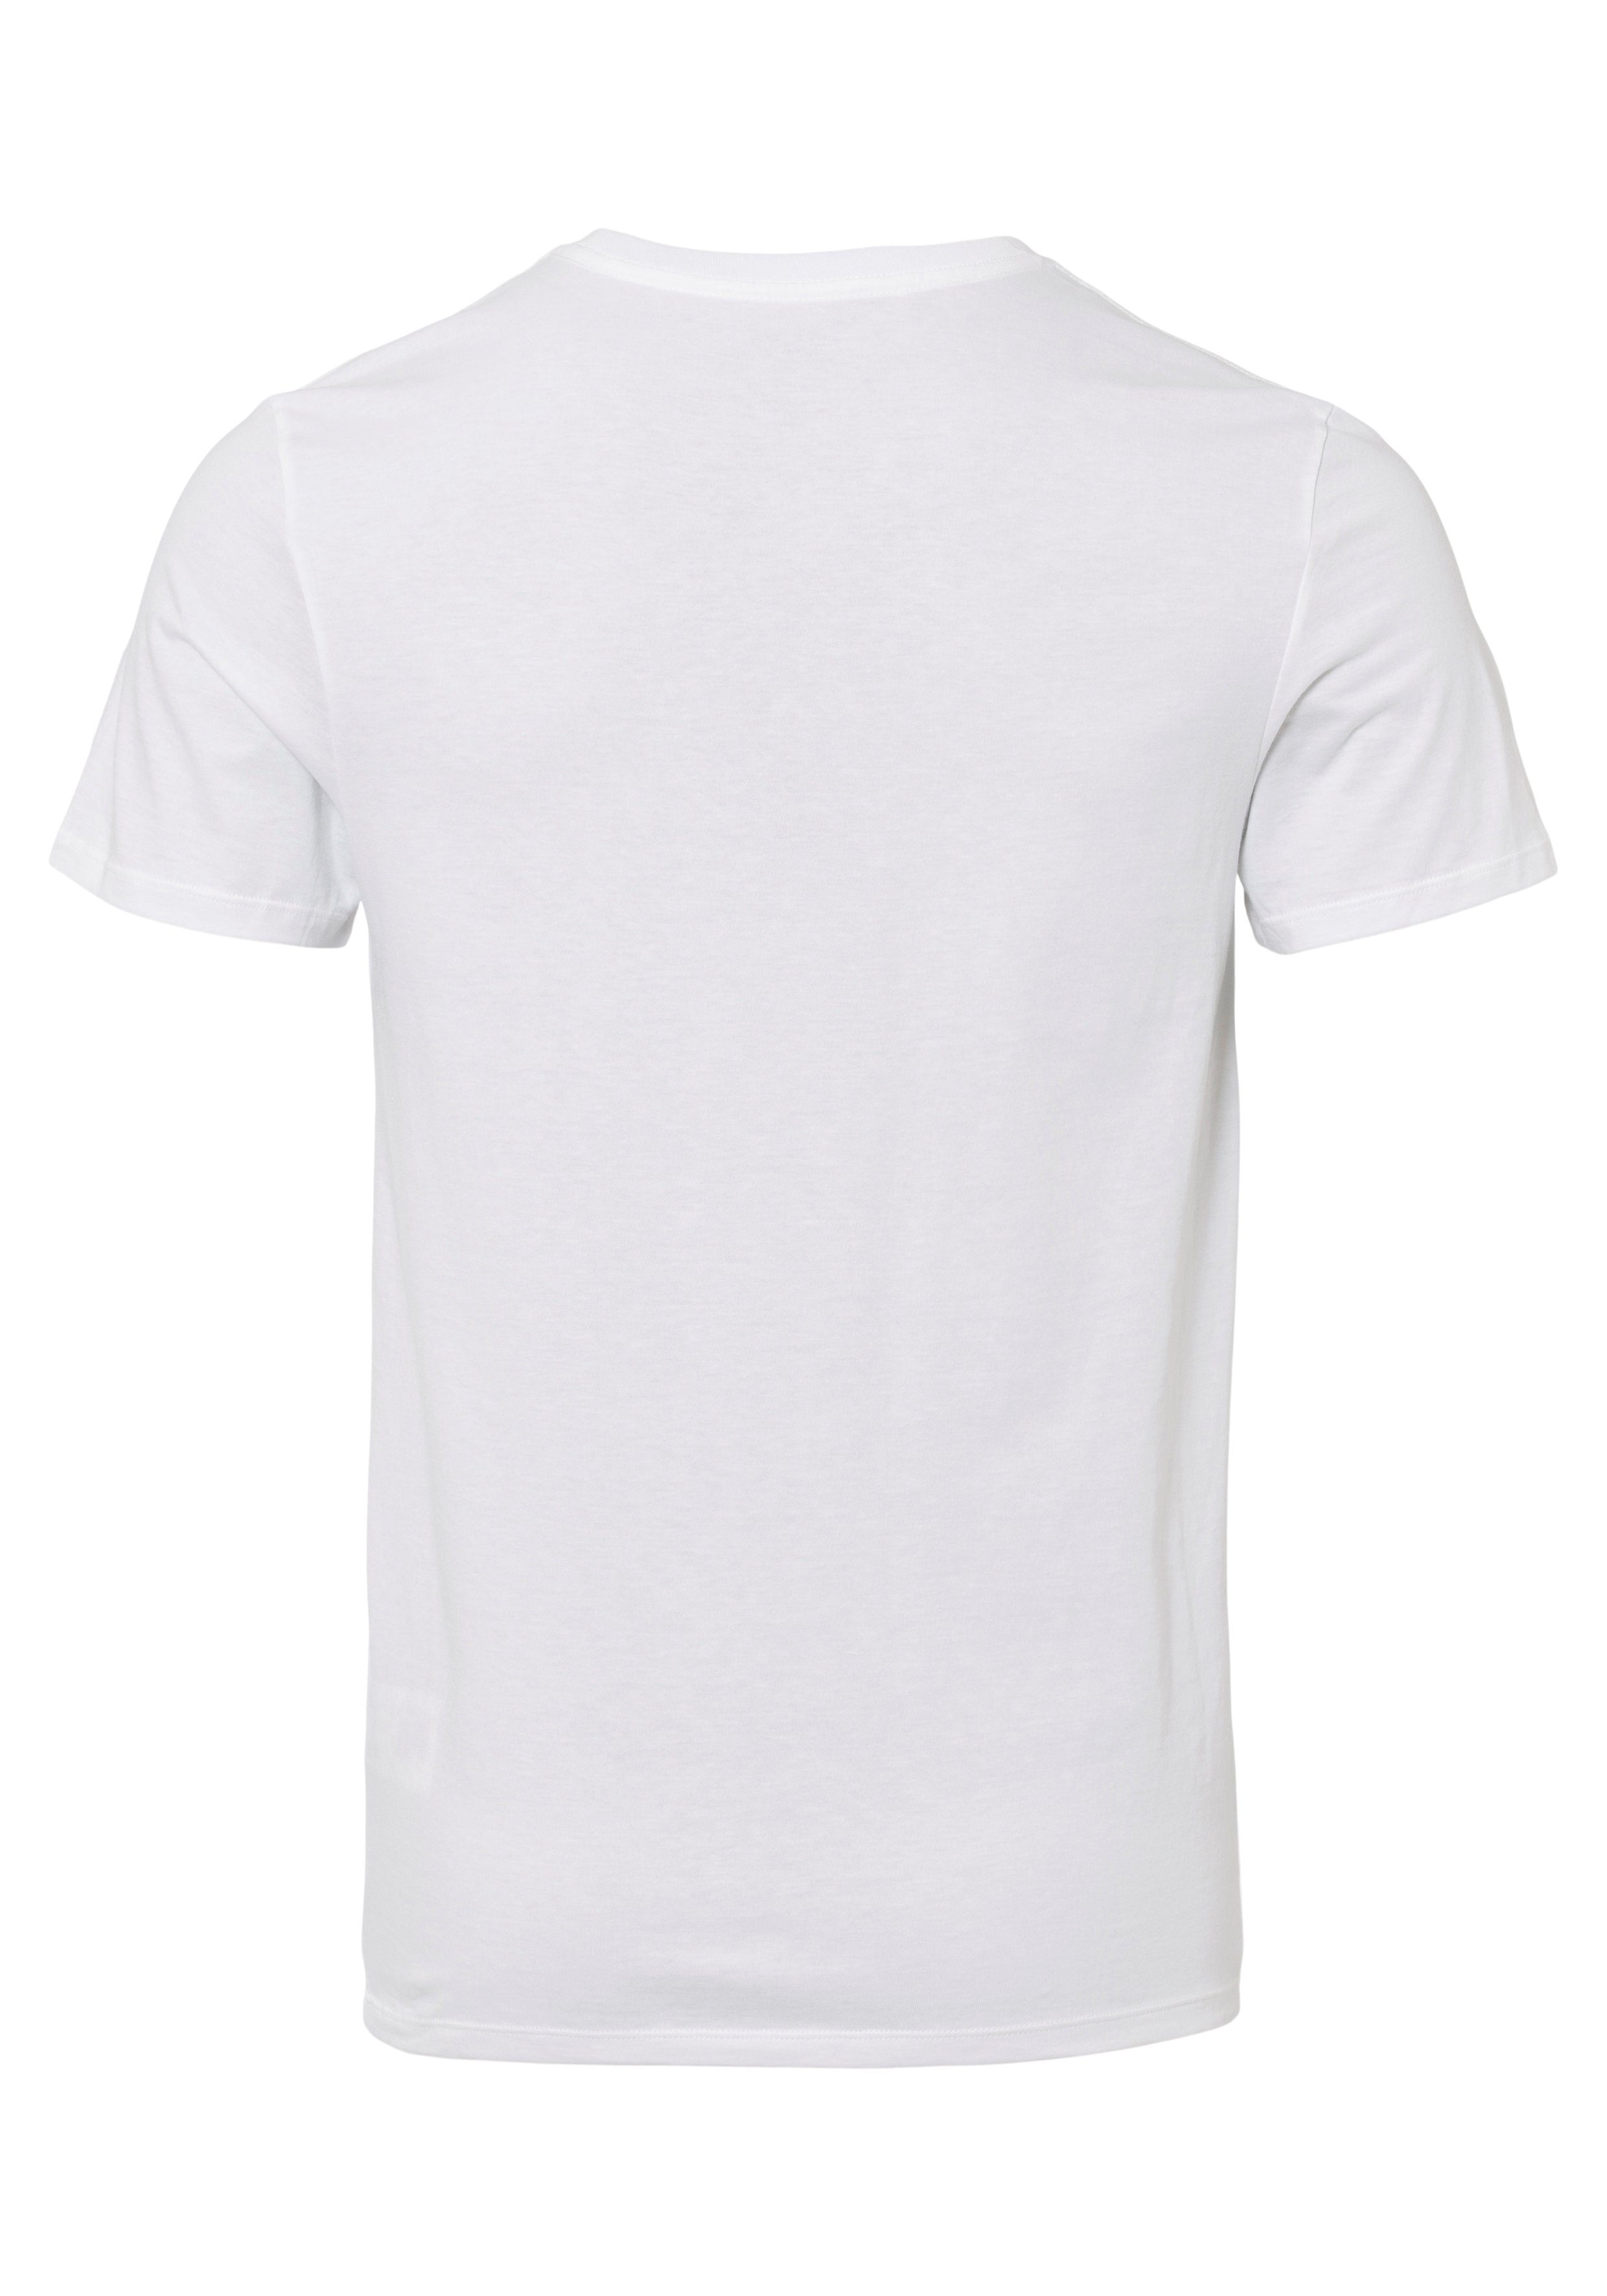 weiß T-Shirt Hautgefühl Atmungsaktives für (3er-Pack) Baumwollmaterial Lacoste angenehmes